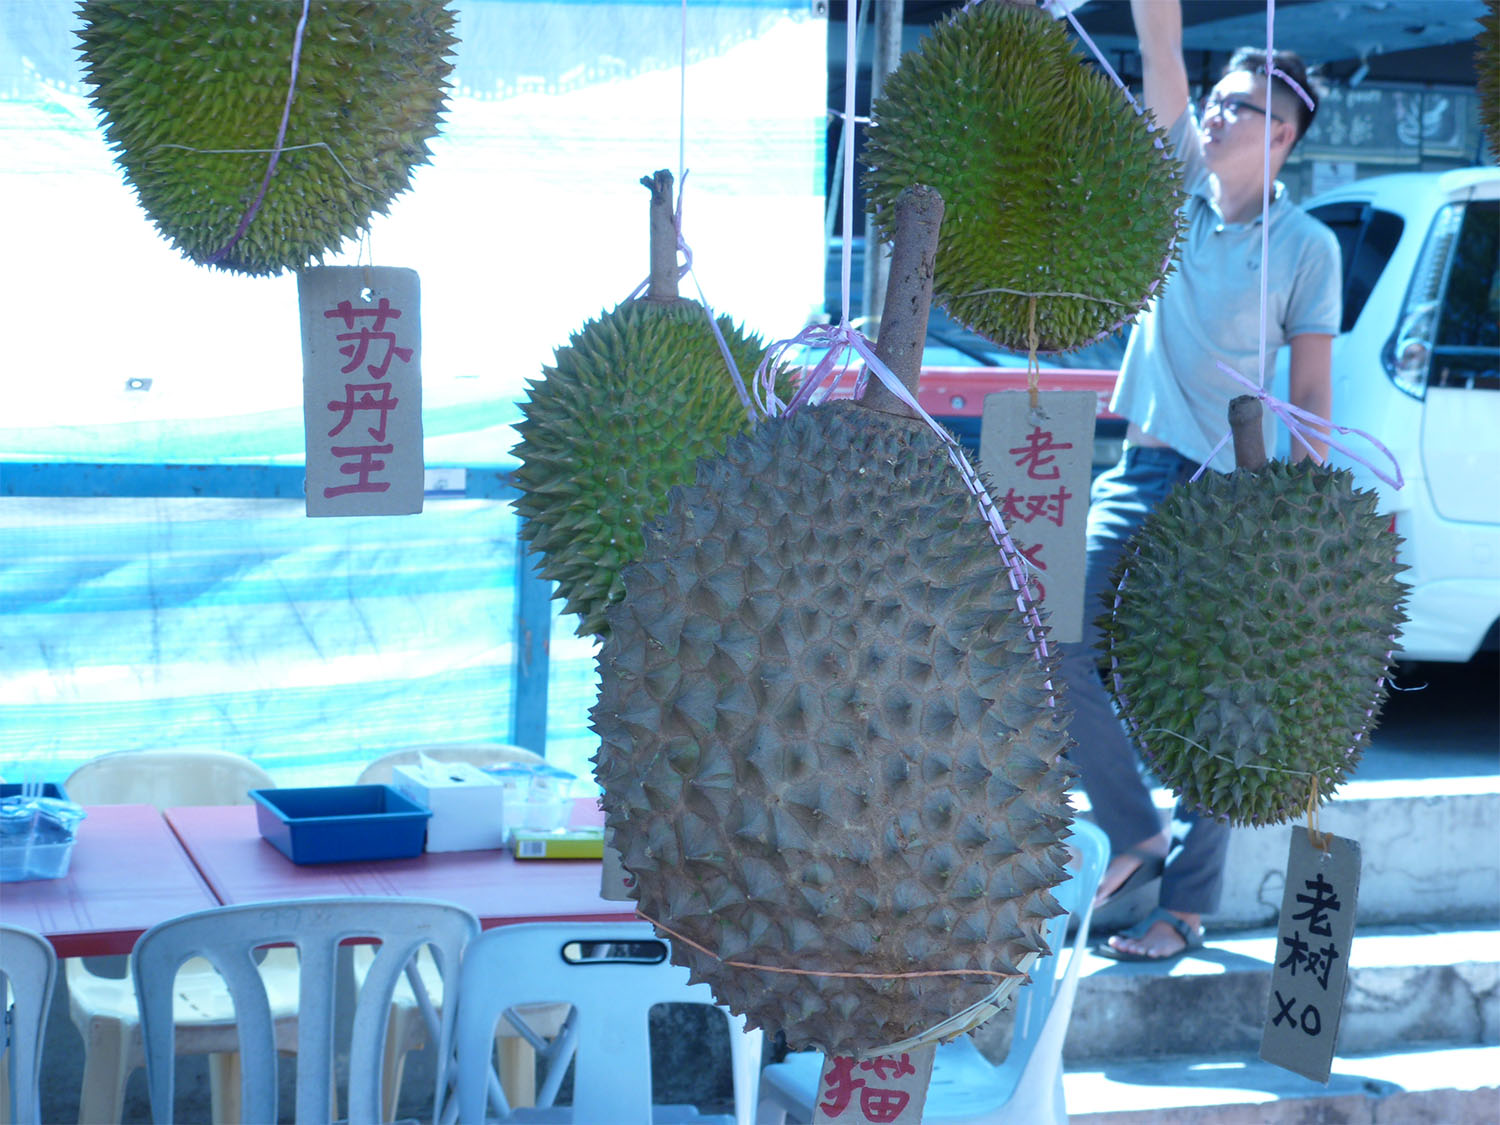 Duran fruit in Penang